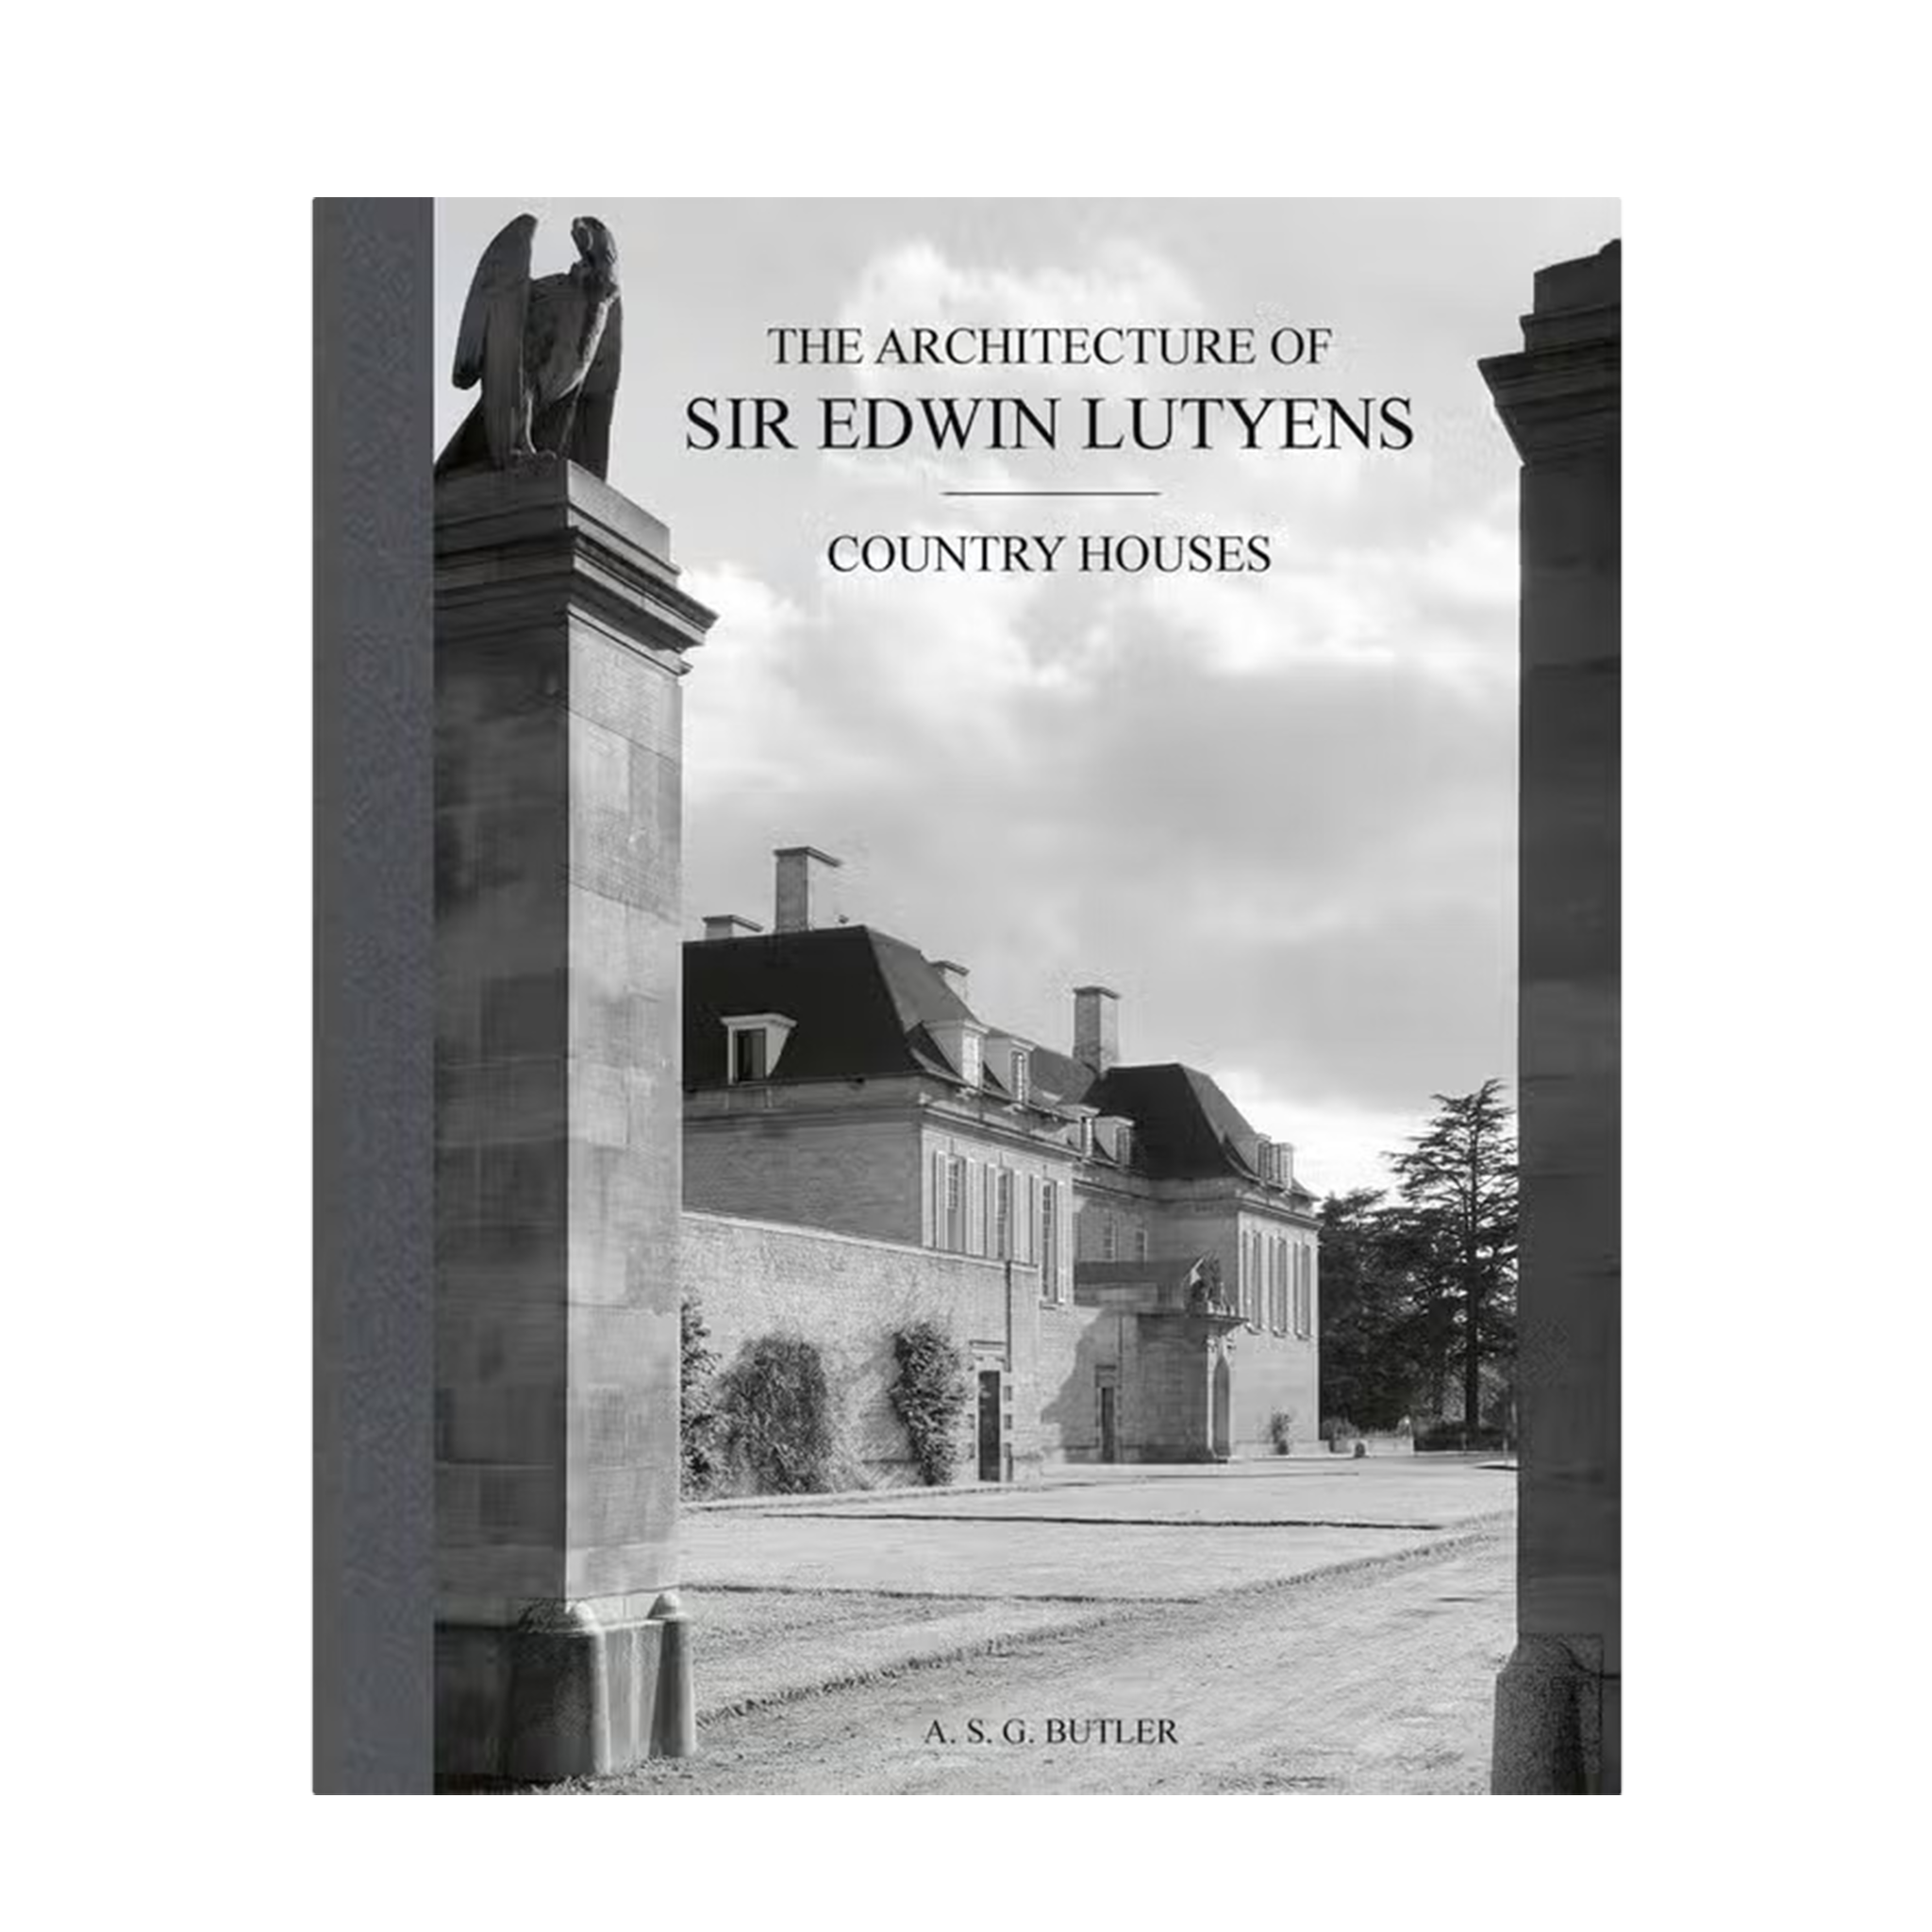 The Architecture of Sir Edwin Lutyens